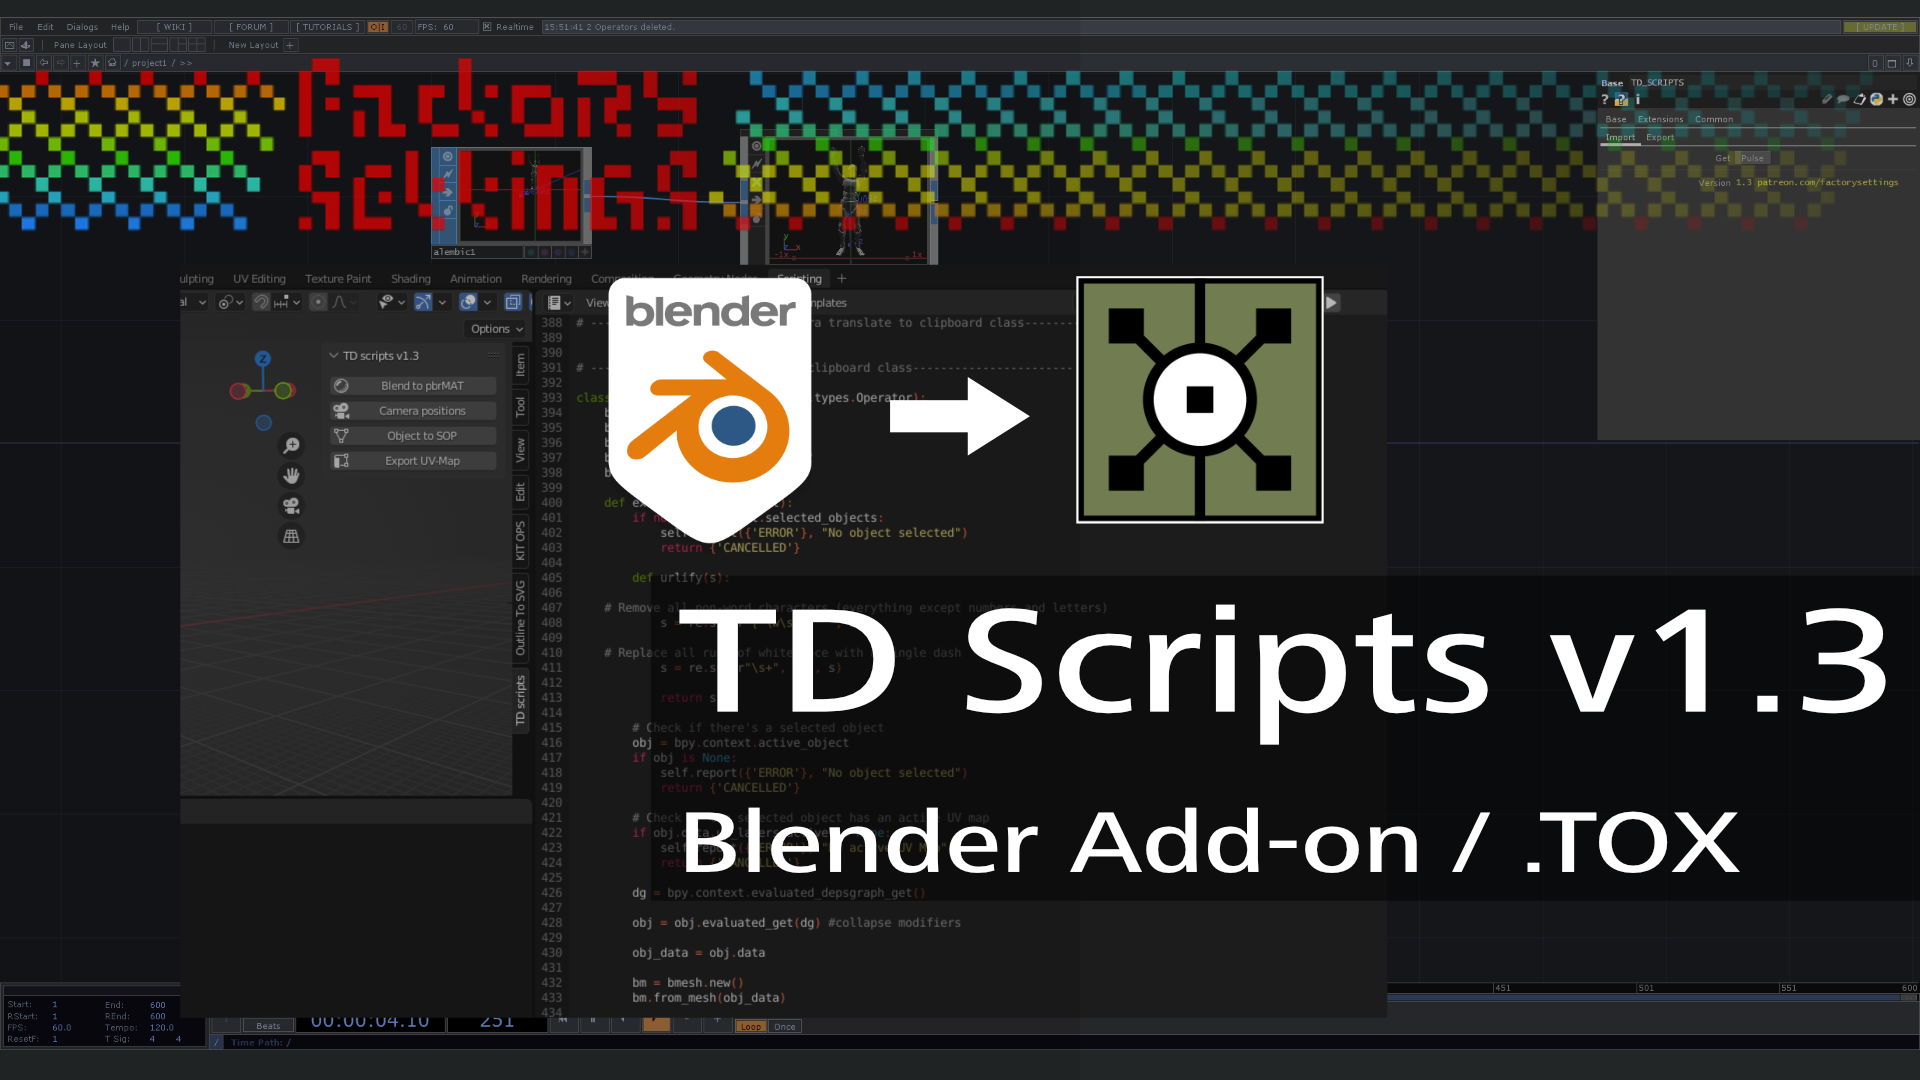 TD SCRIPTS V1.3: A BLENDER ADD-ON FOR TOUCHDESIGNER